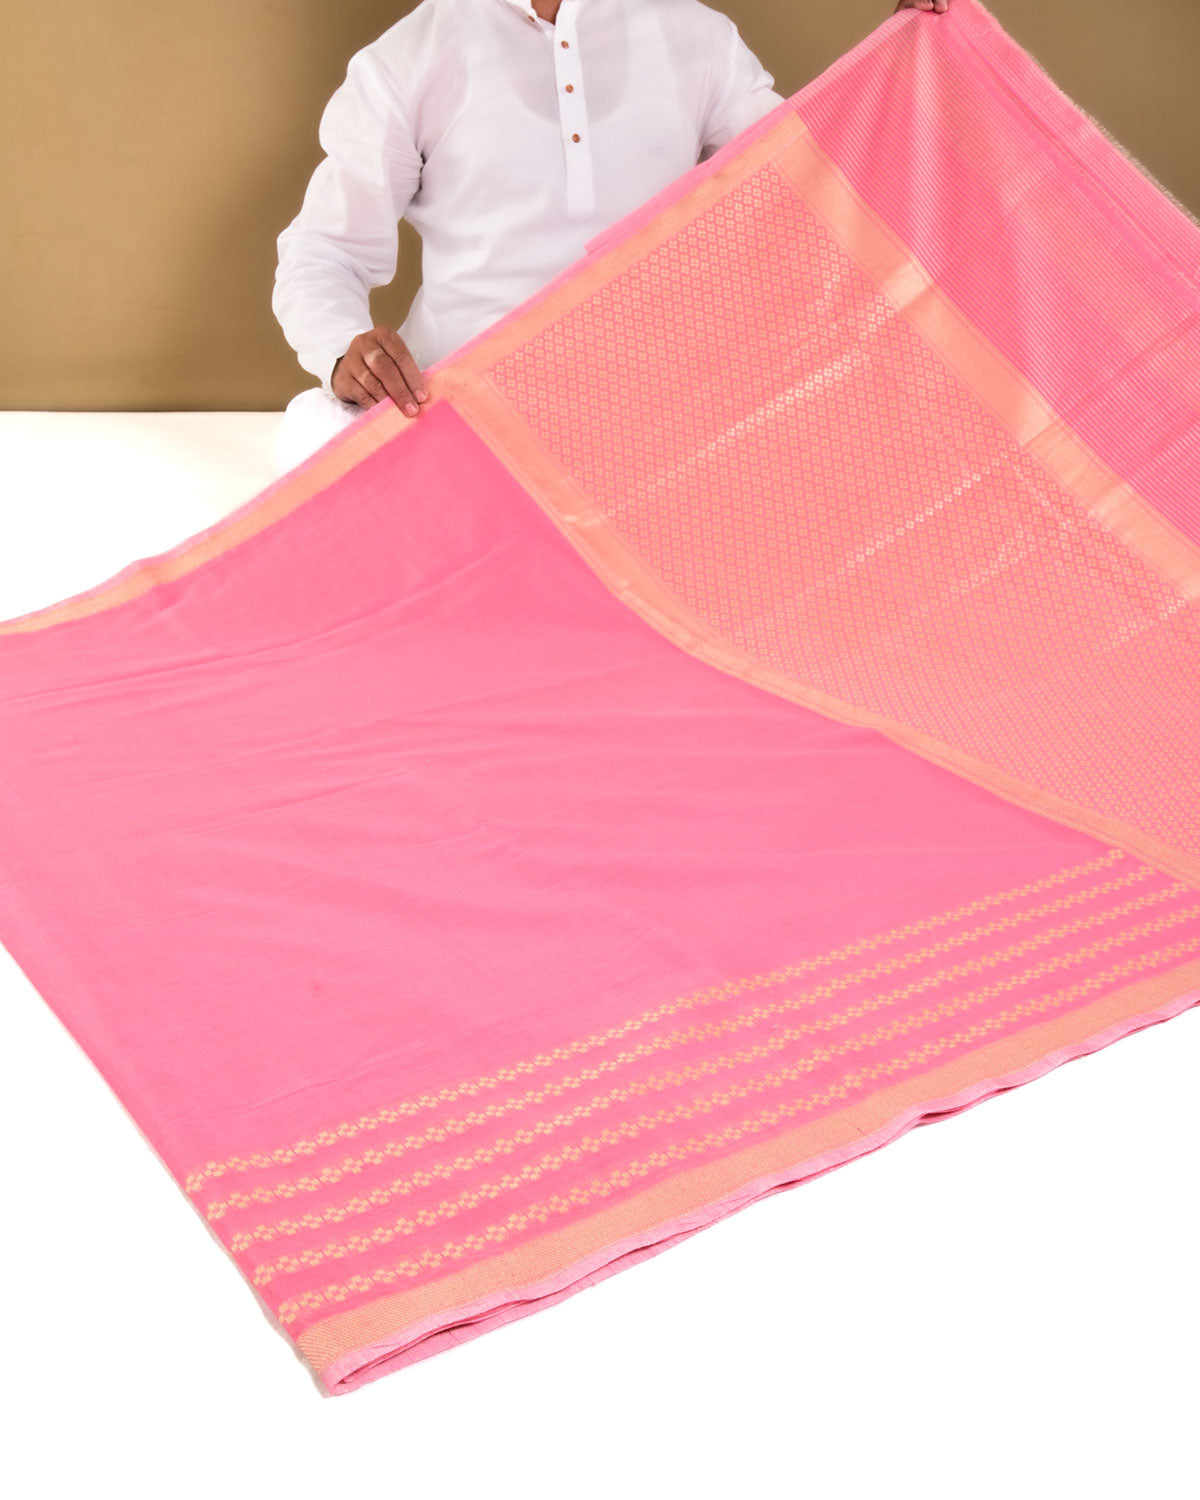 Pink Banarasi Gold Zari Cutwork Brocade Handwoven Cotton Silk Saree with Horizontal Grid - By HolyWeaves, Benares